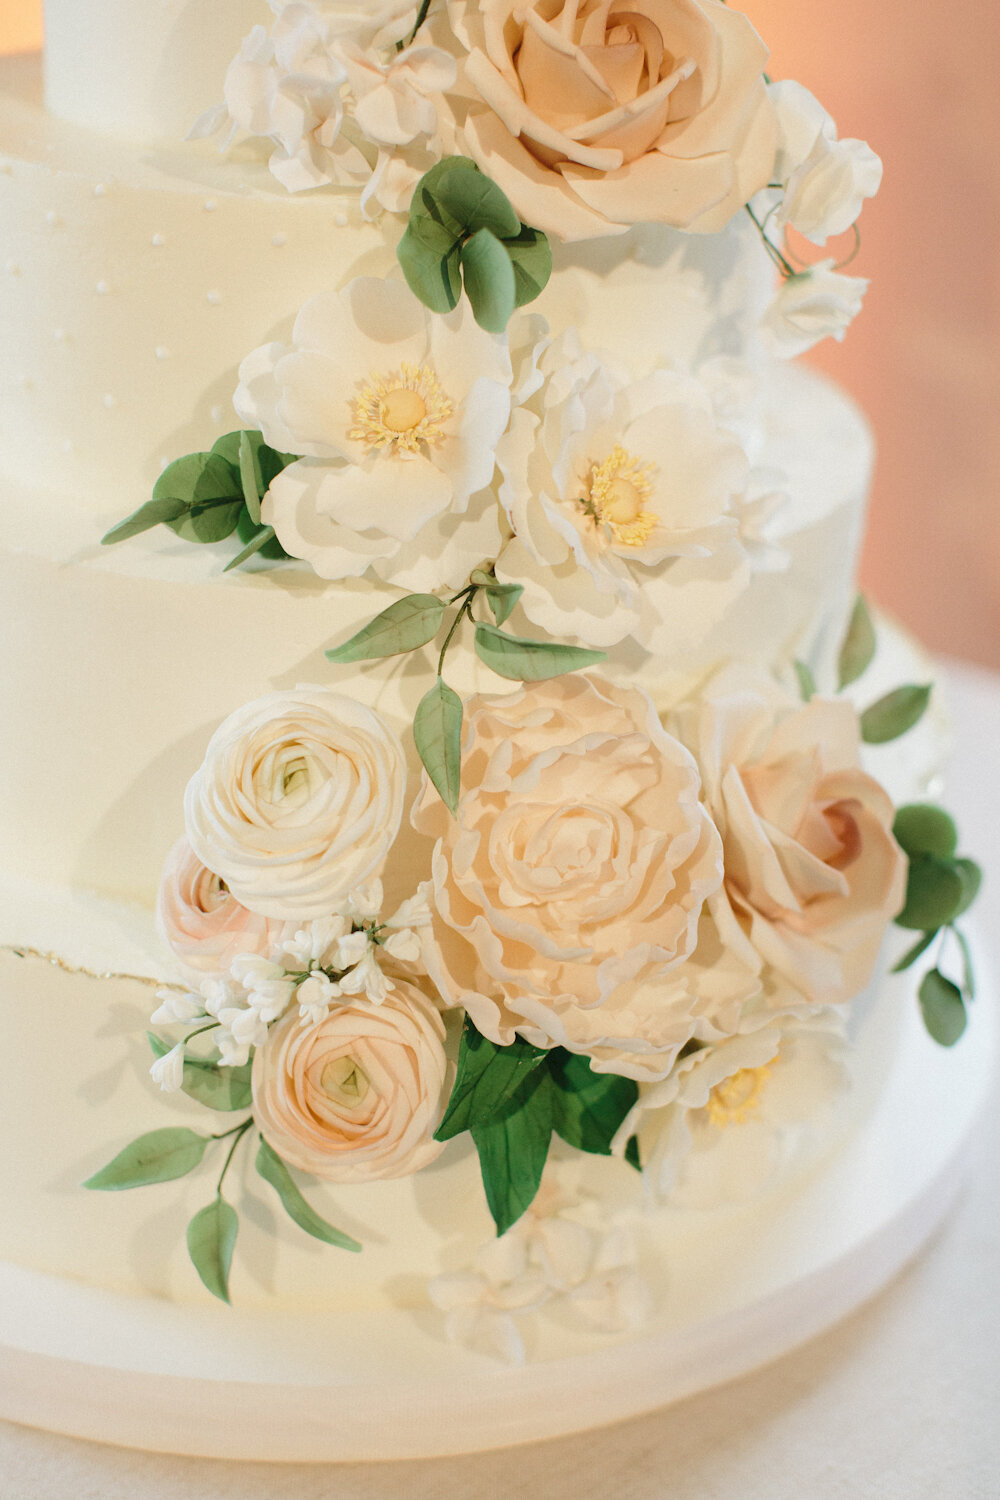 sugar flowers on wedding cake.jpg